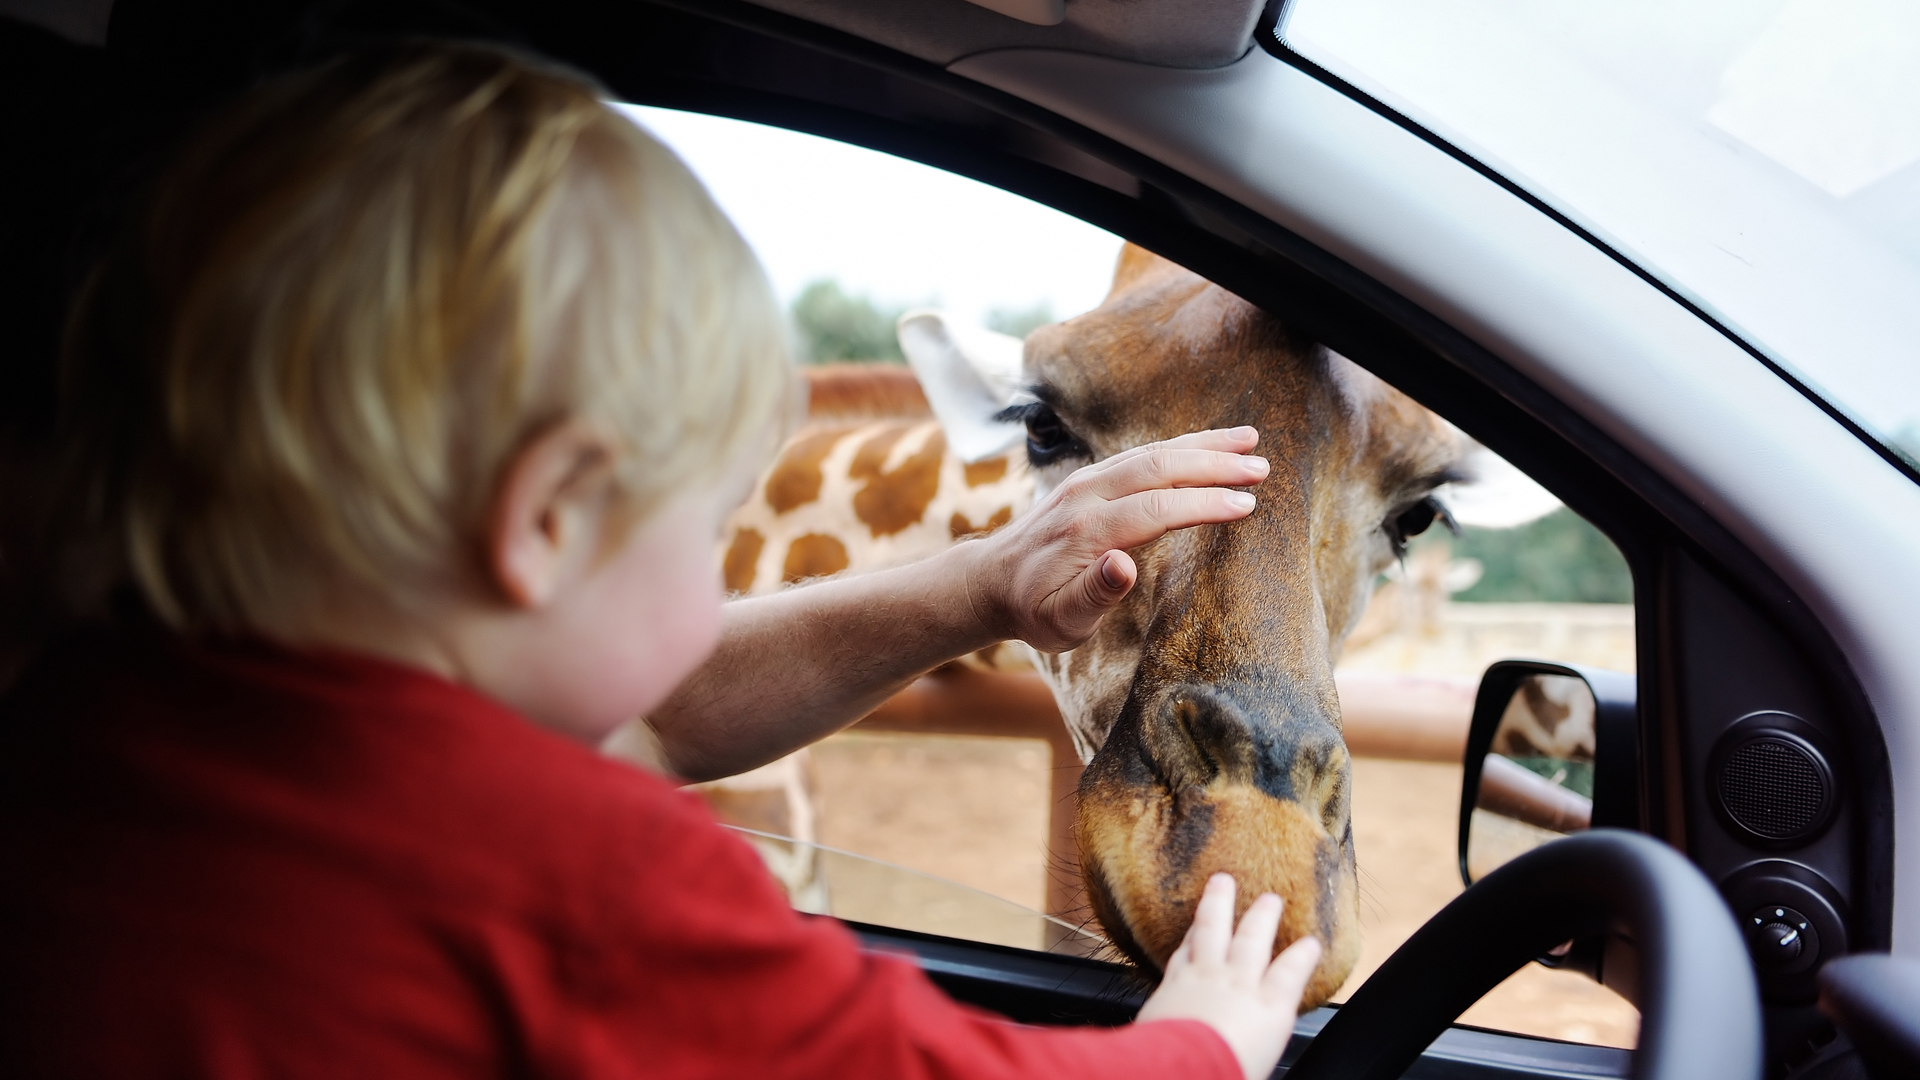 Child stroking giraffe at Safari Park 